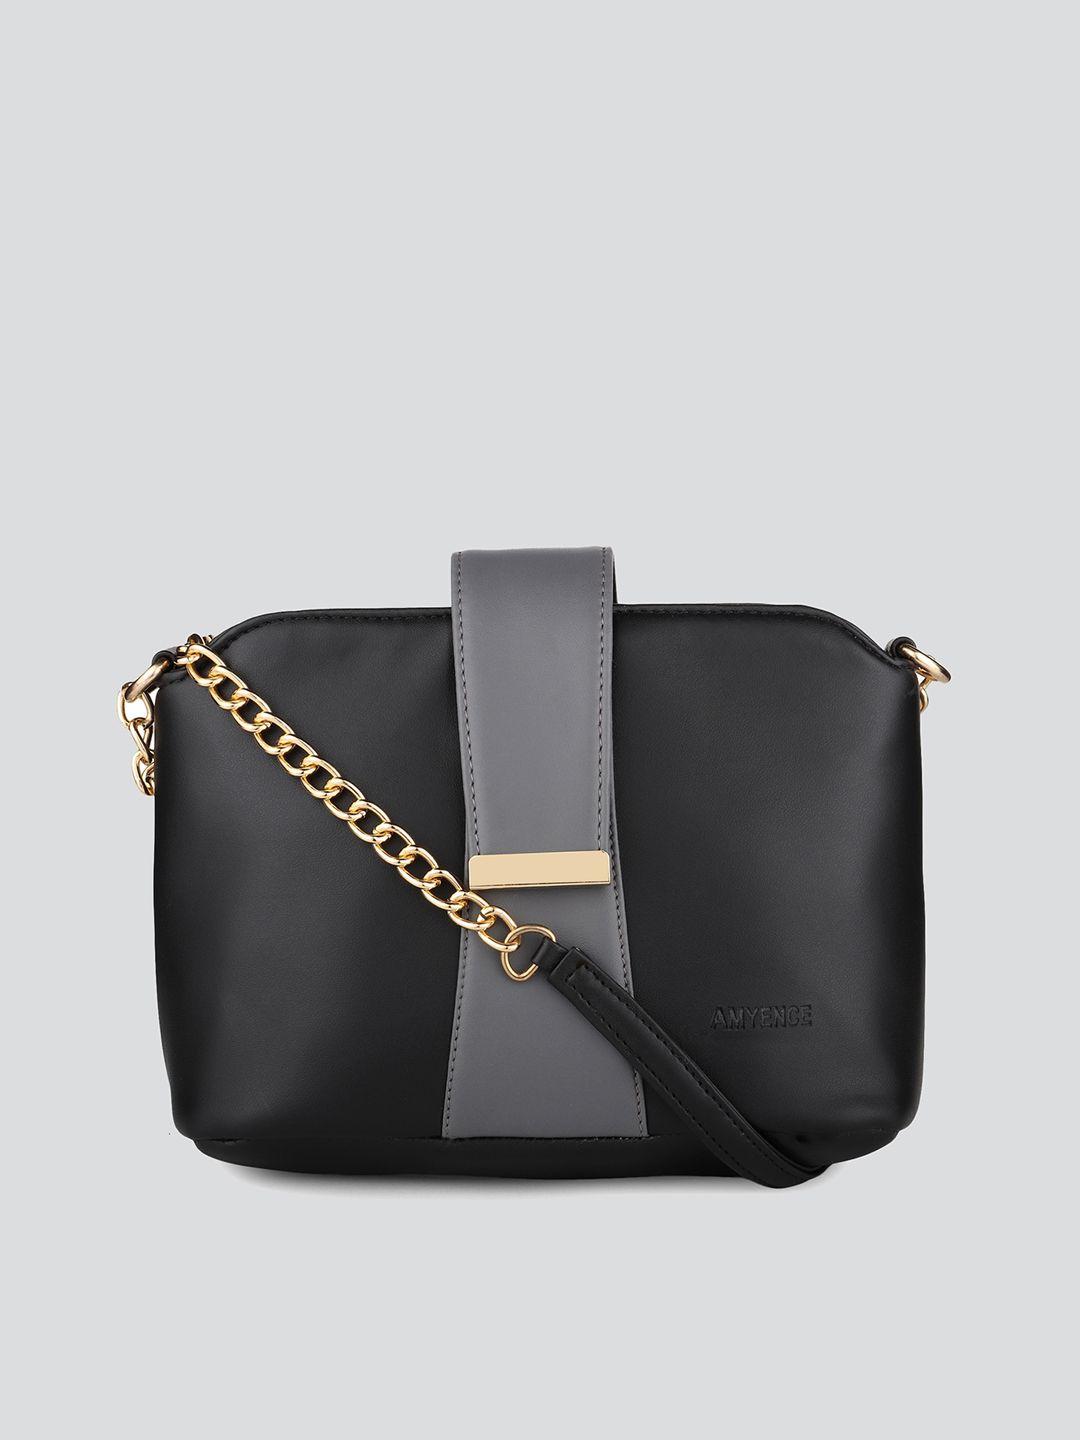 amyence black colourblocked structured sling bag